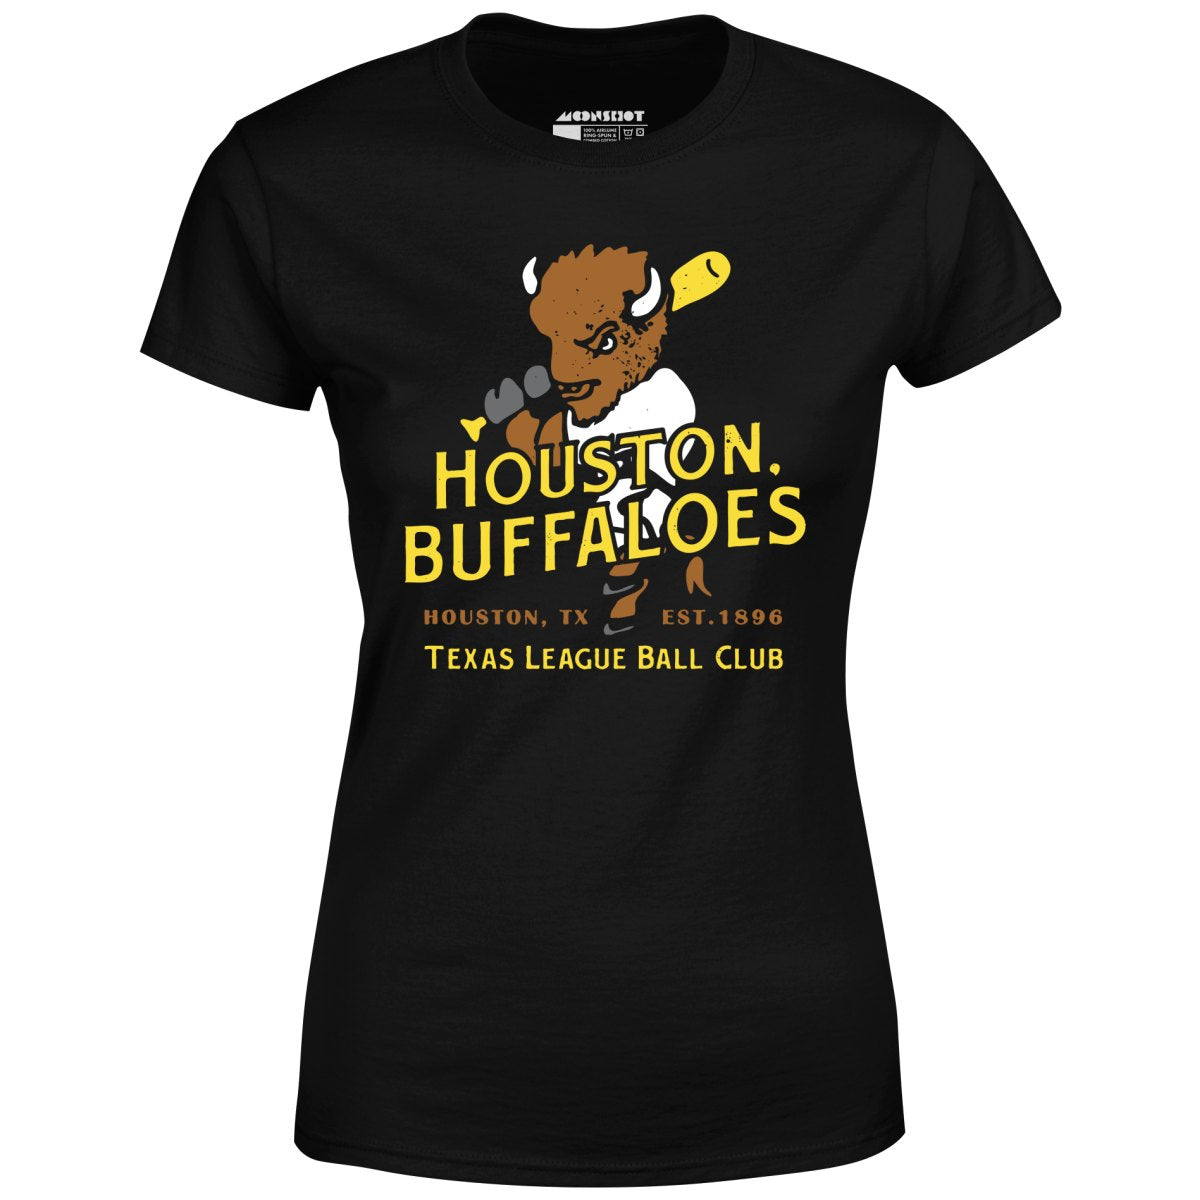 Houston Buffaloes - Texas - Vintage Defunct Baseball Teams - Women's T-Shirt